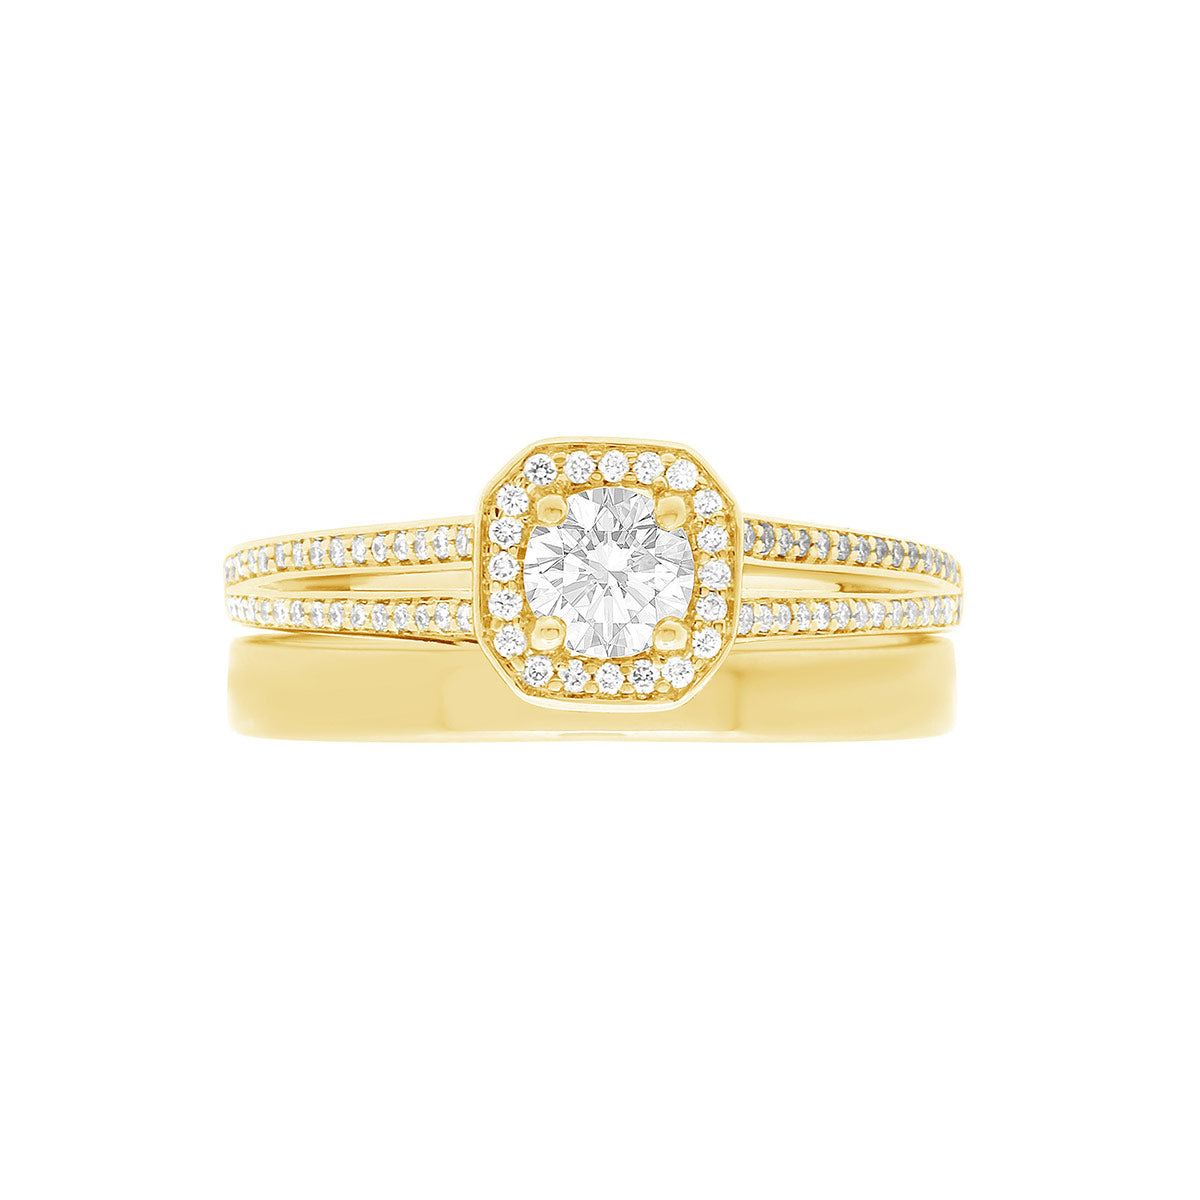 Pavé Halo Diamond Ring with a matching yellow gold wedding ring